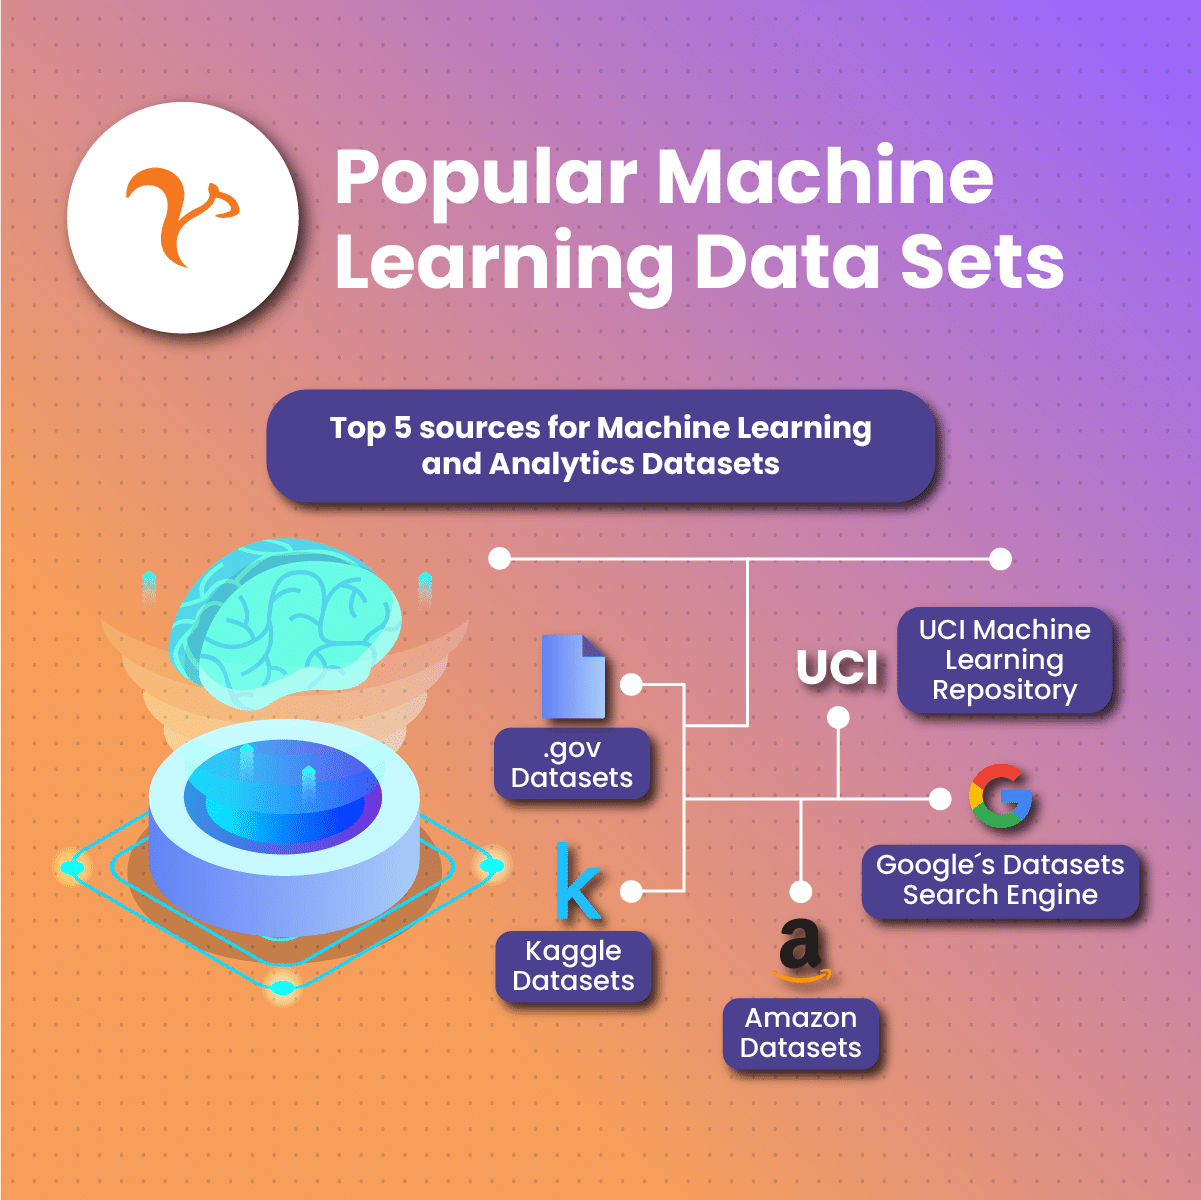 Popular Machine Learning Data Sets